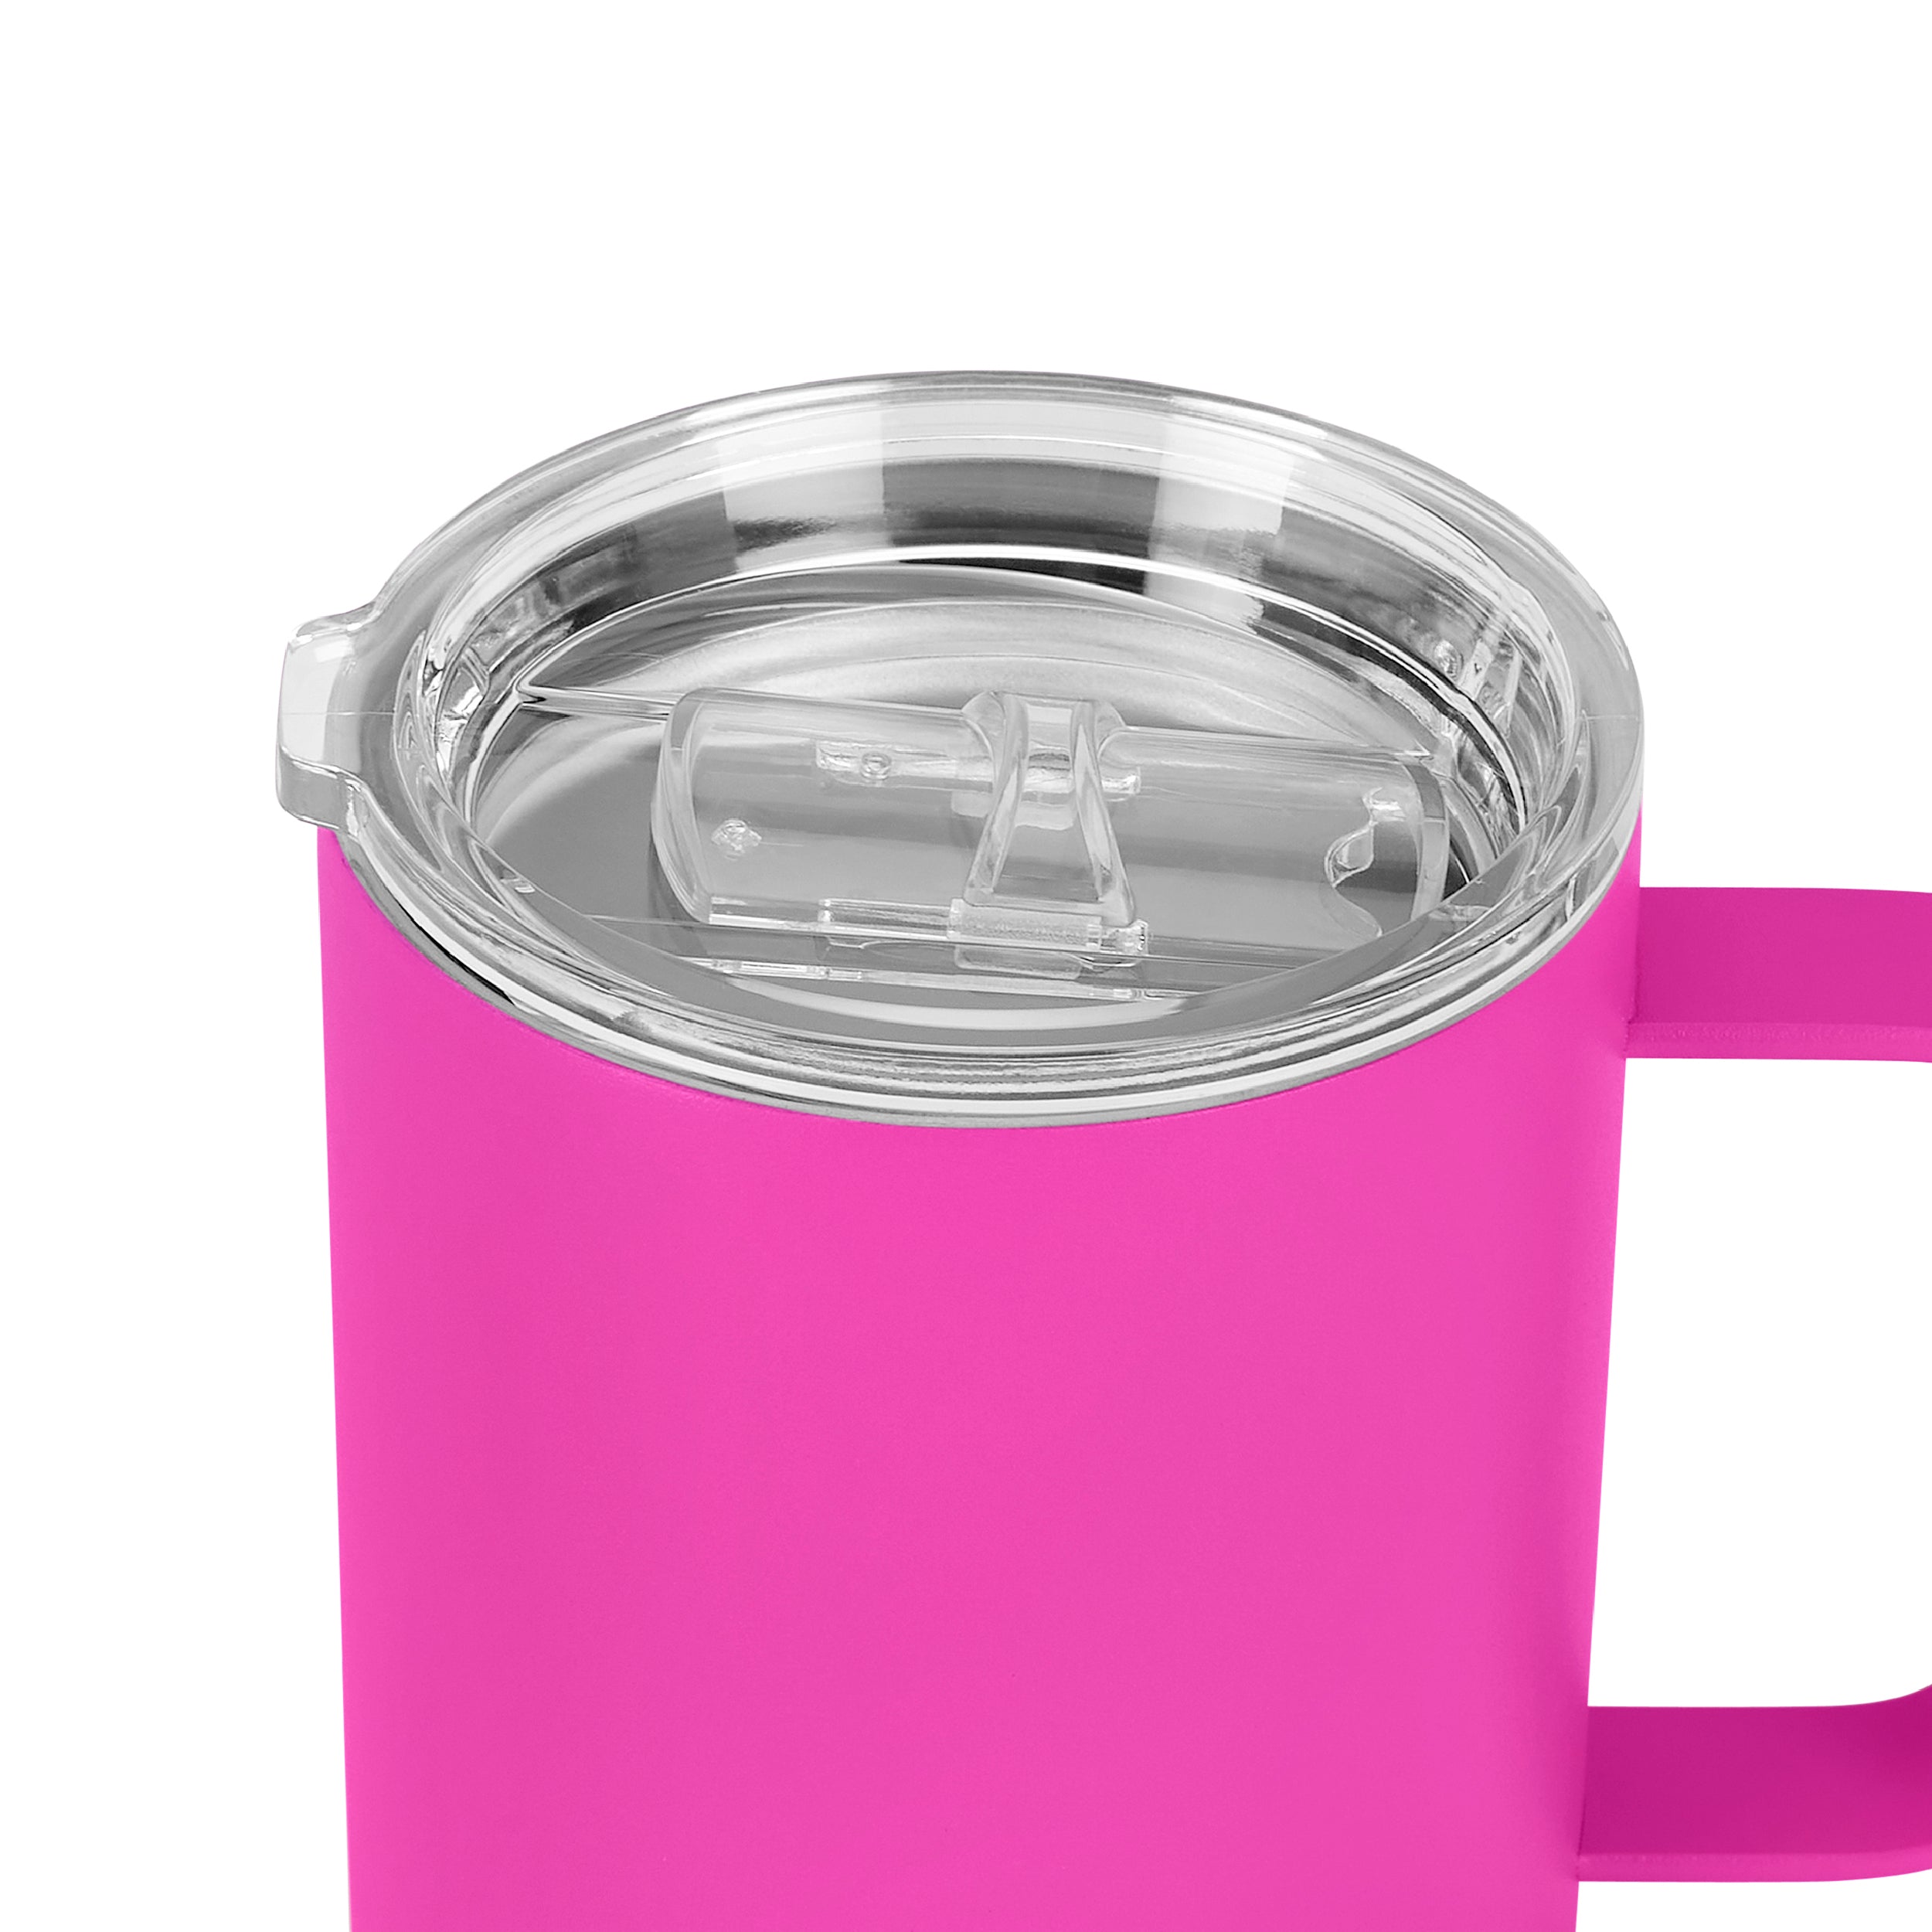 12oz Coffee Mug for Breast Cancer Awareness